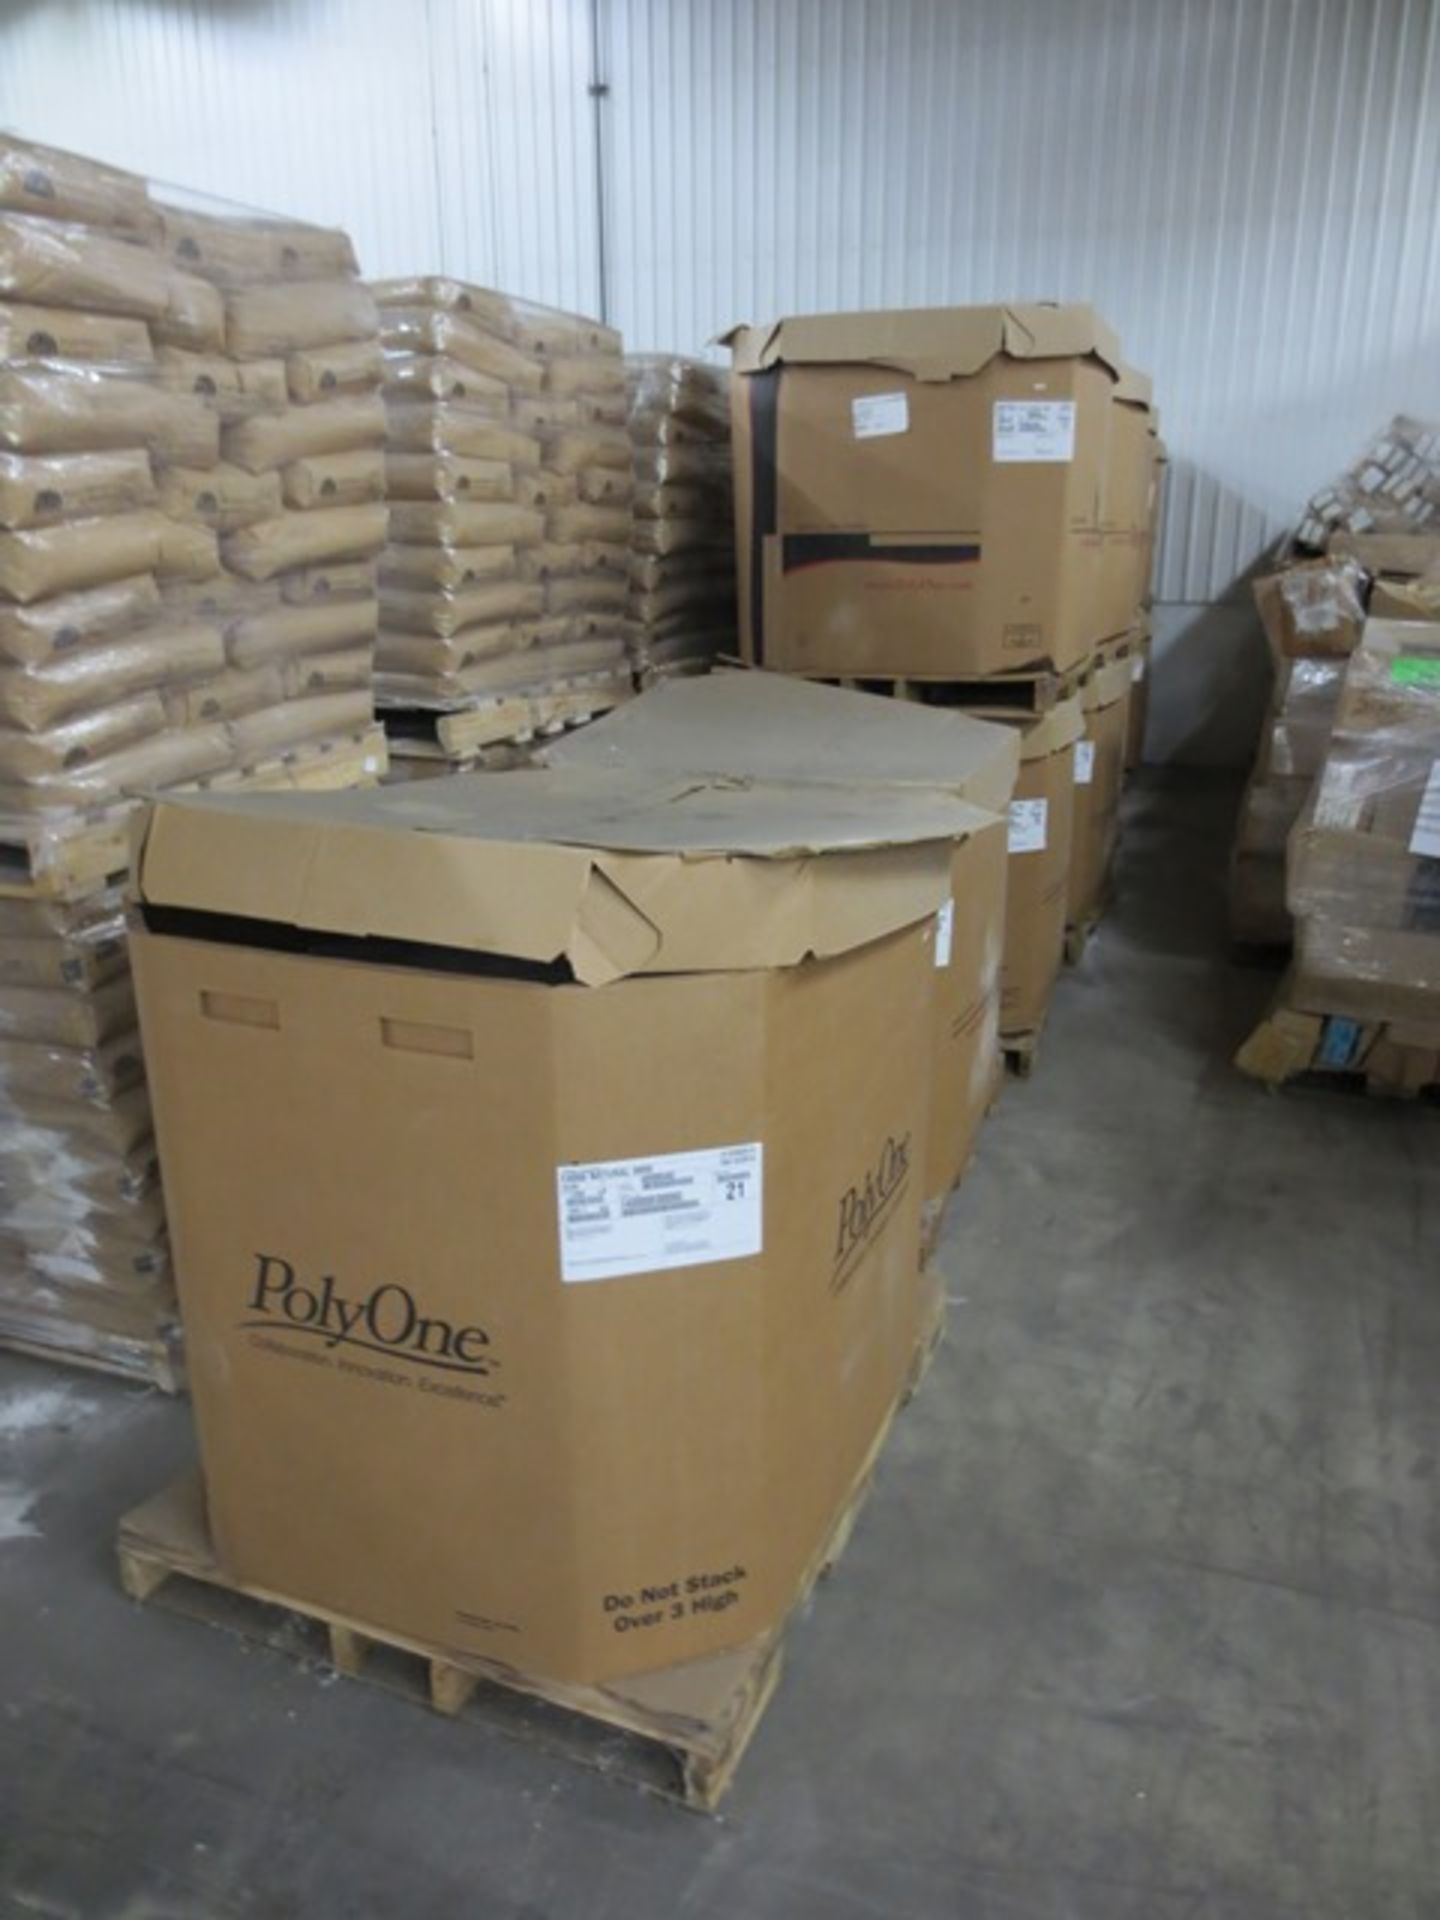 8,099 KG of bulk boxed compound polyone E4000